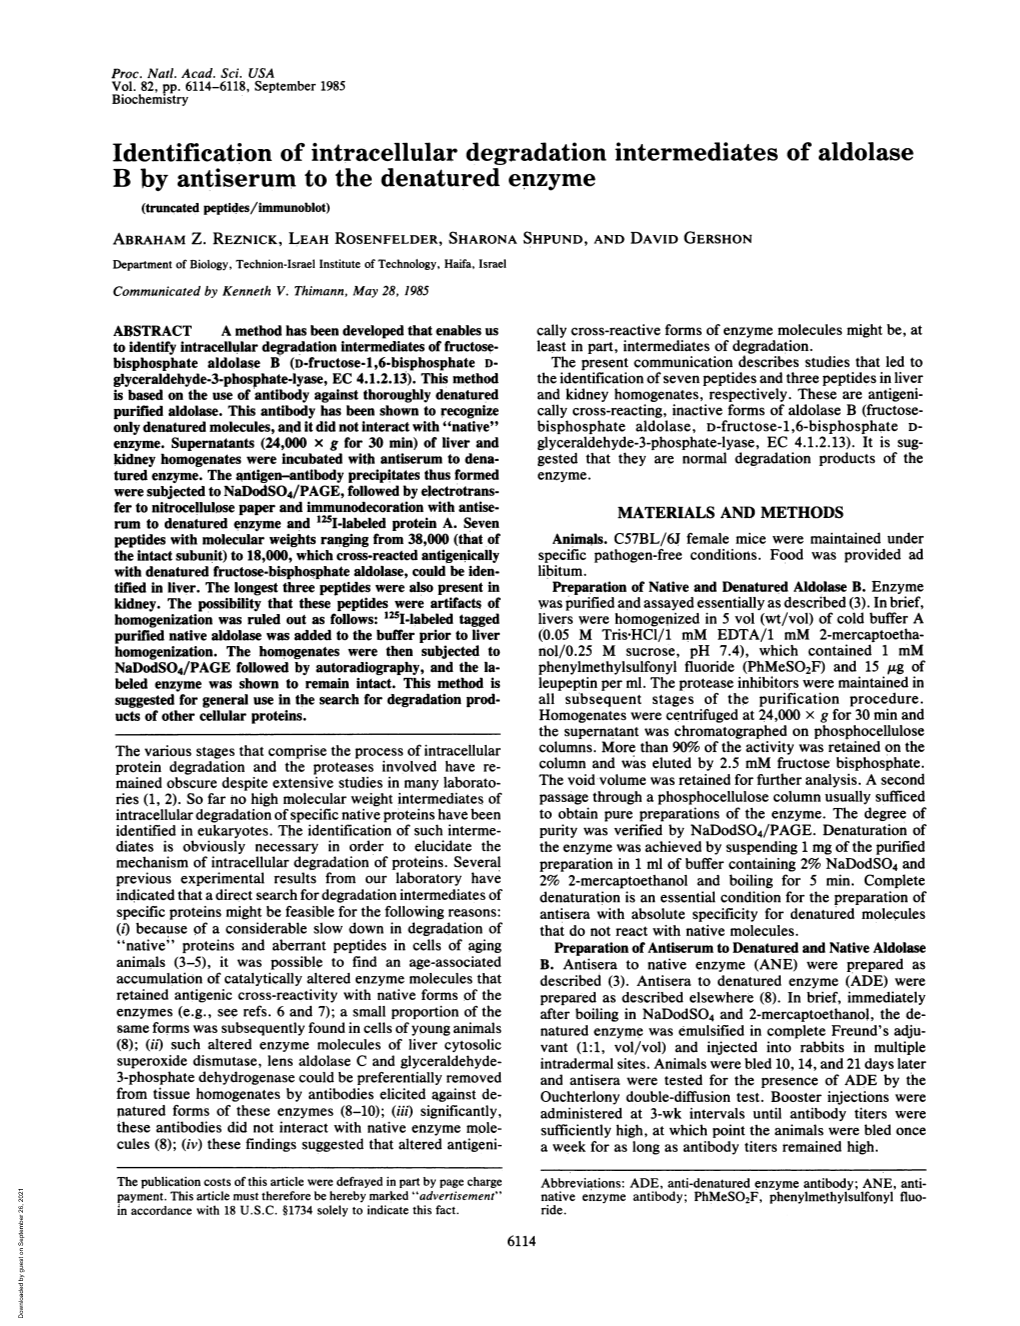 Identification of Intracellular Degradation Intermediates of Aldolase B by Antiserum to the Denatured Enzyme (Truncated Peptides/Immunoblot) ABRAHAM Z